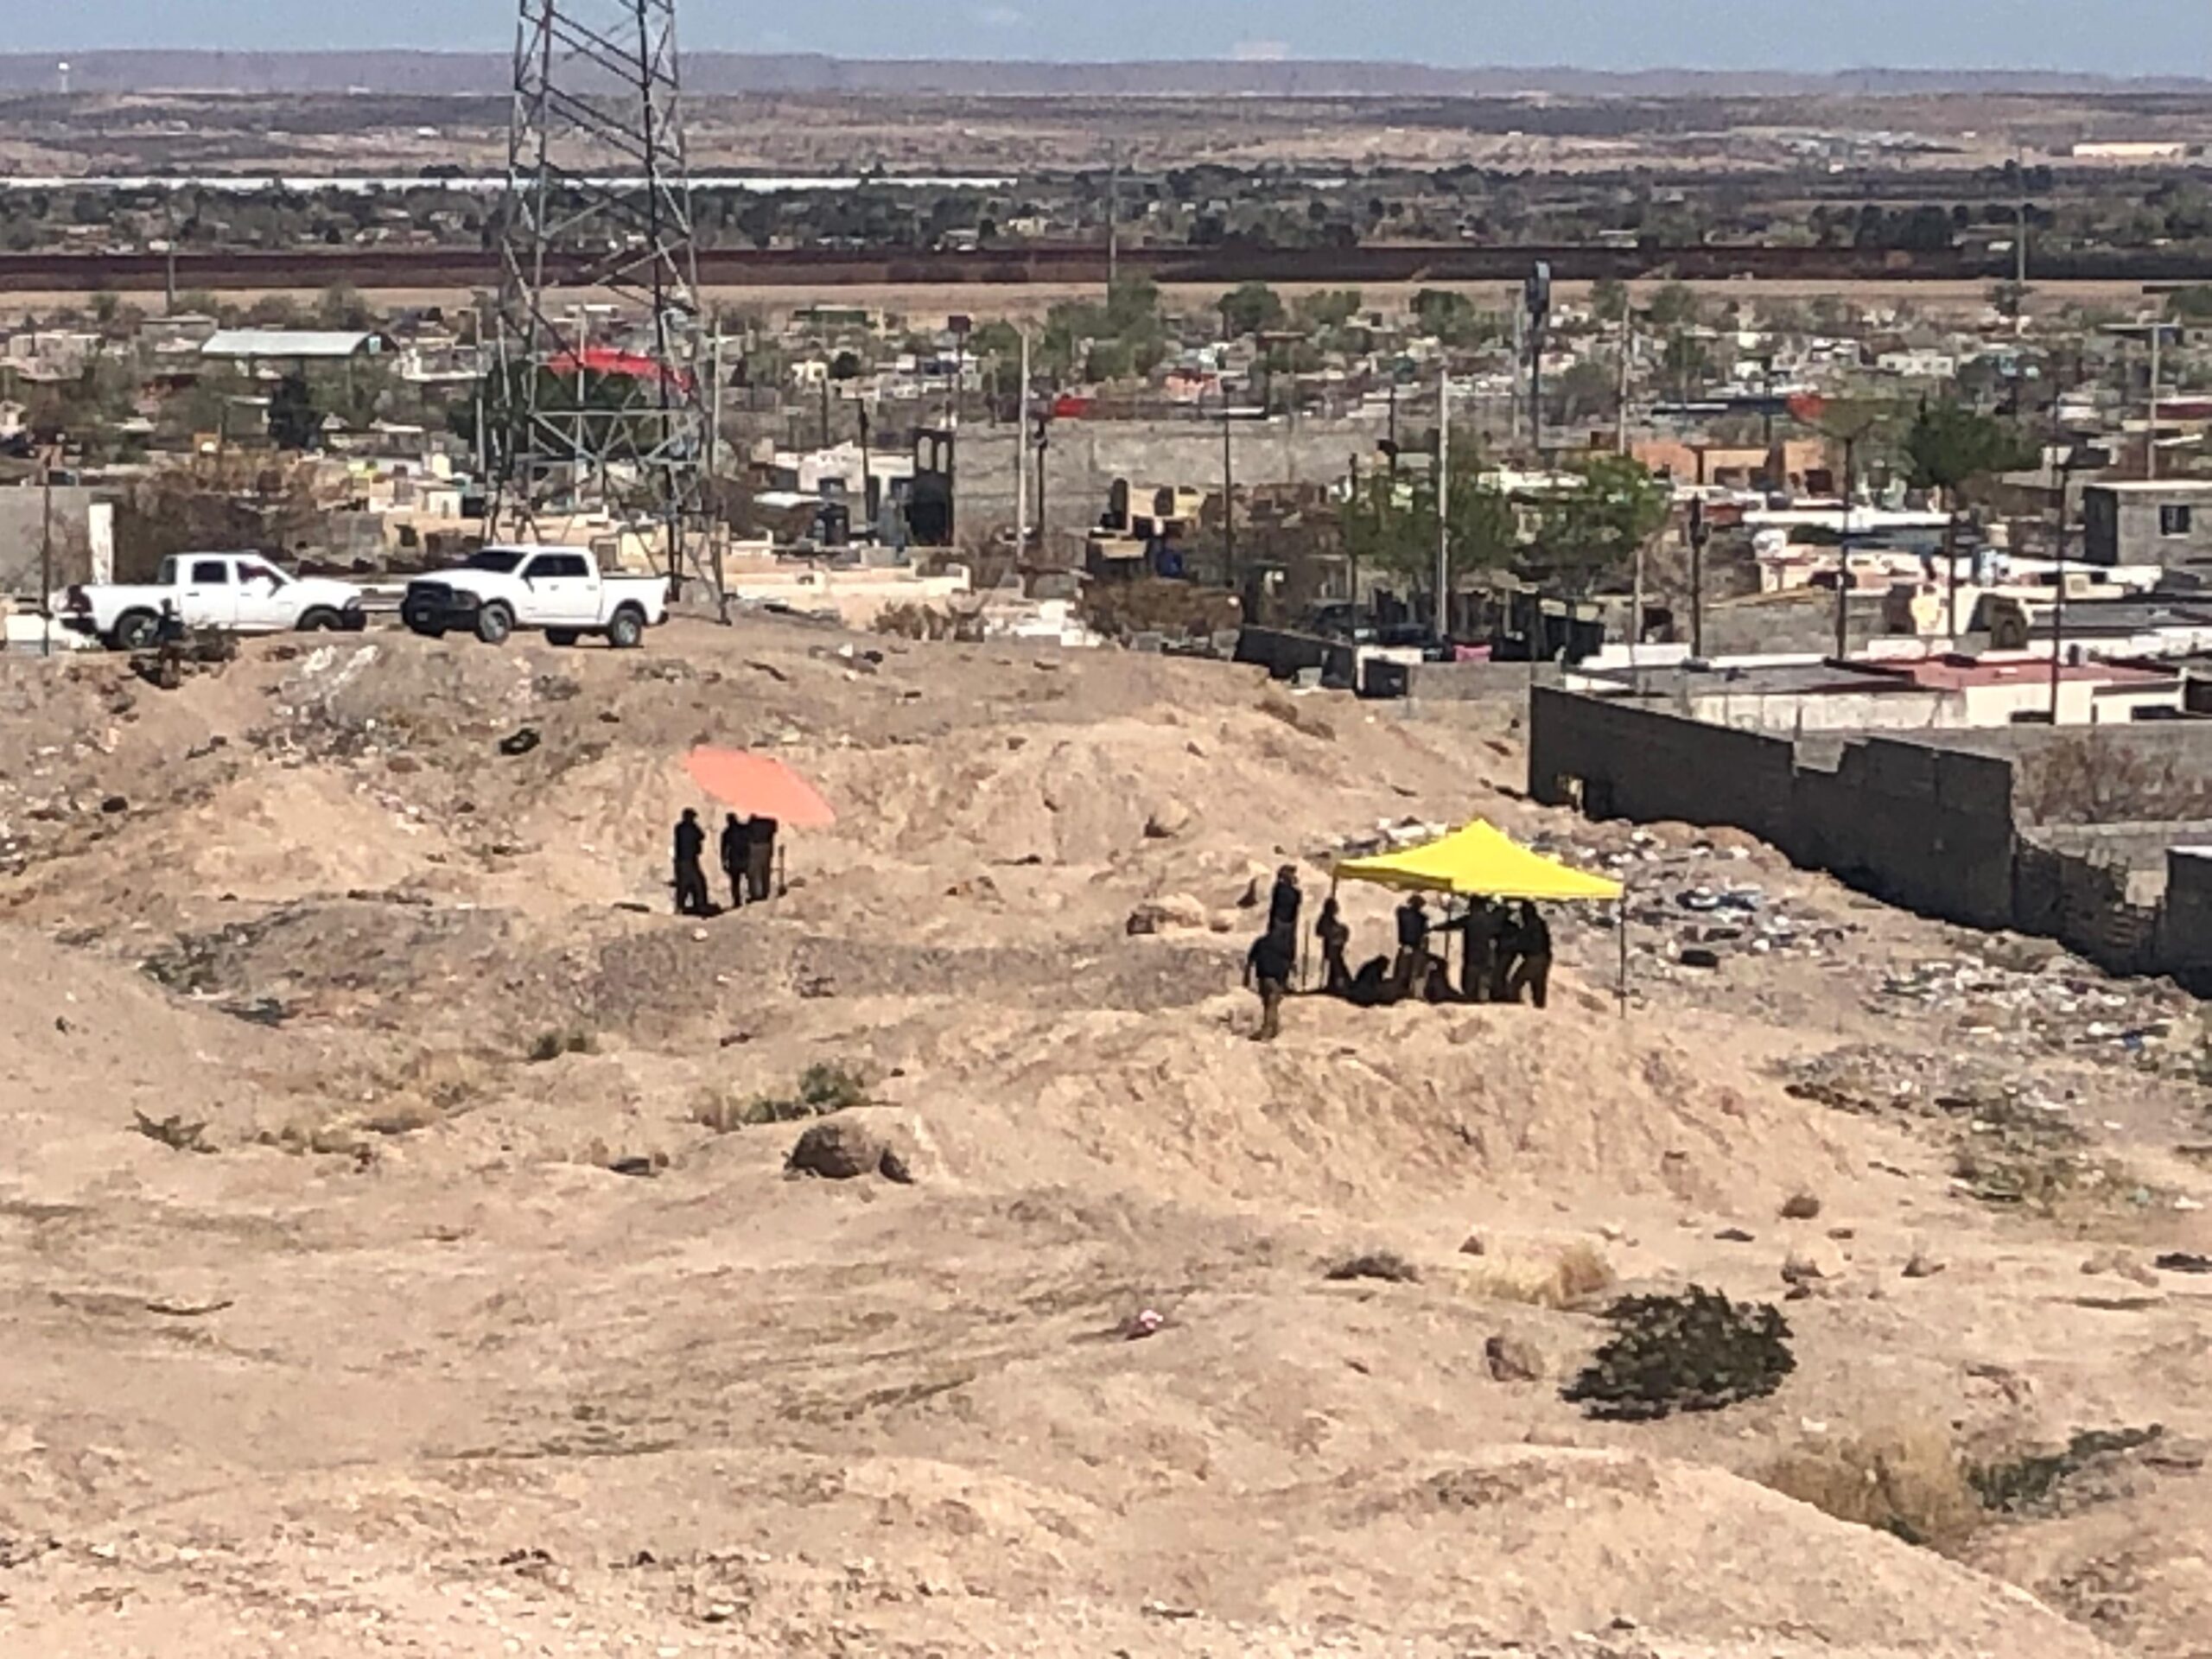 17 bodies found in Ciudad Juarez clandestine cemetery